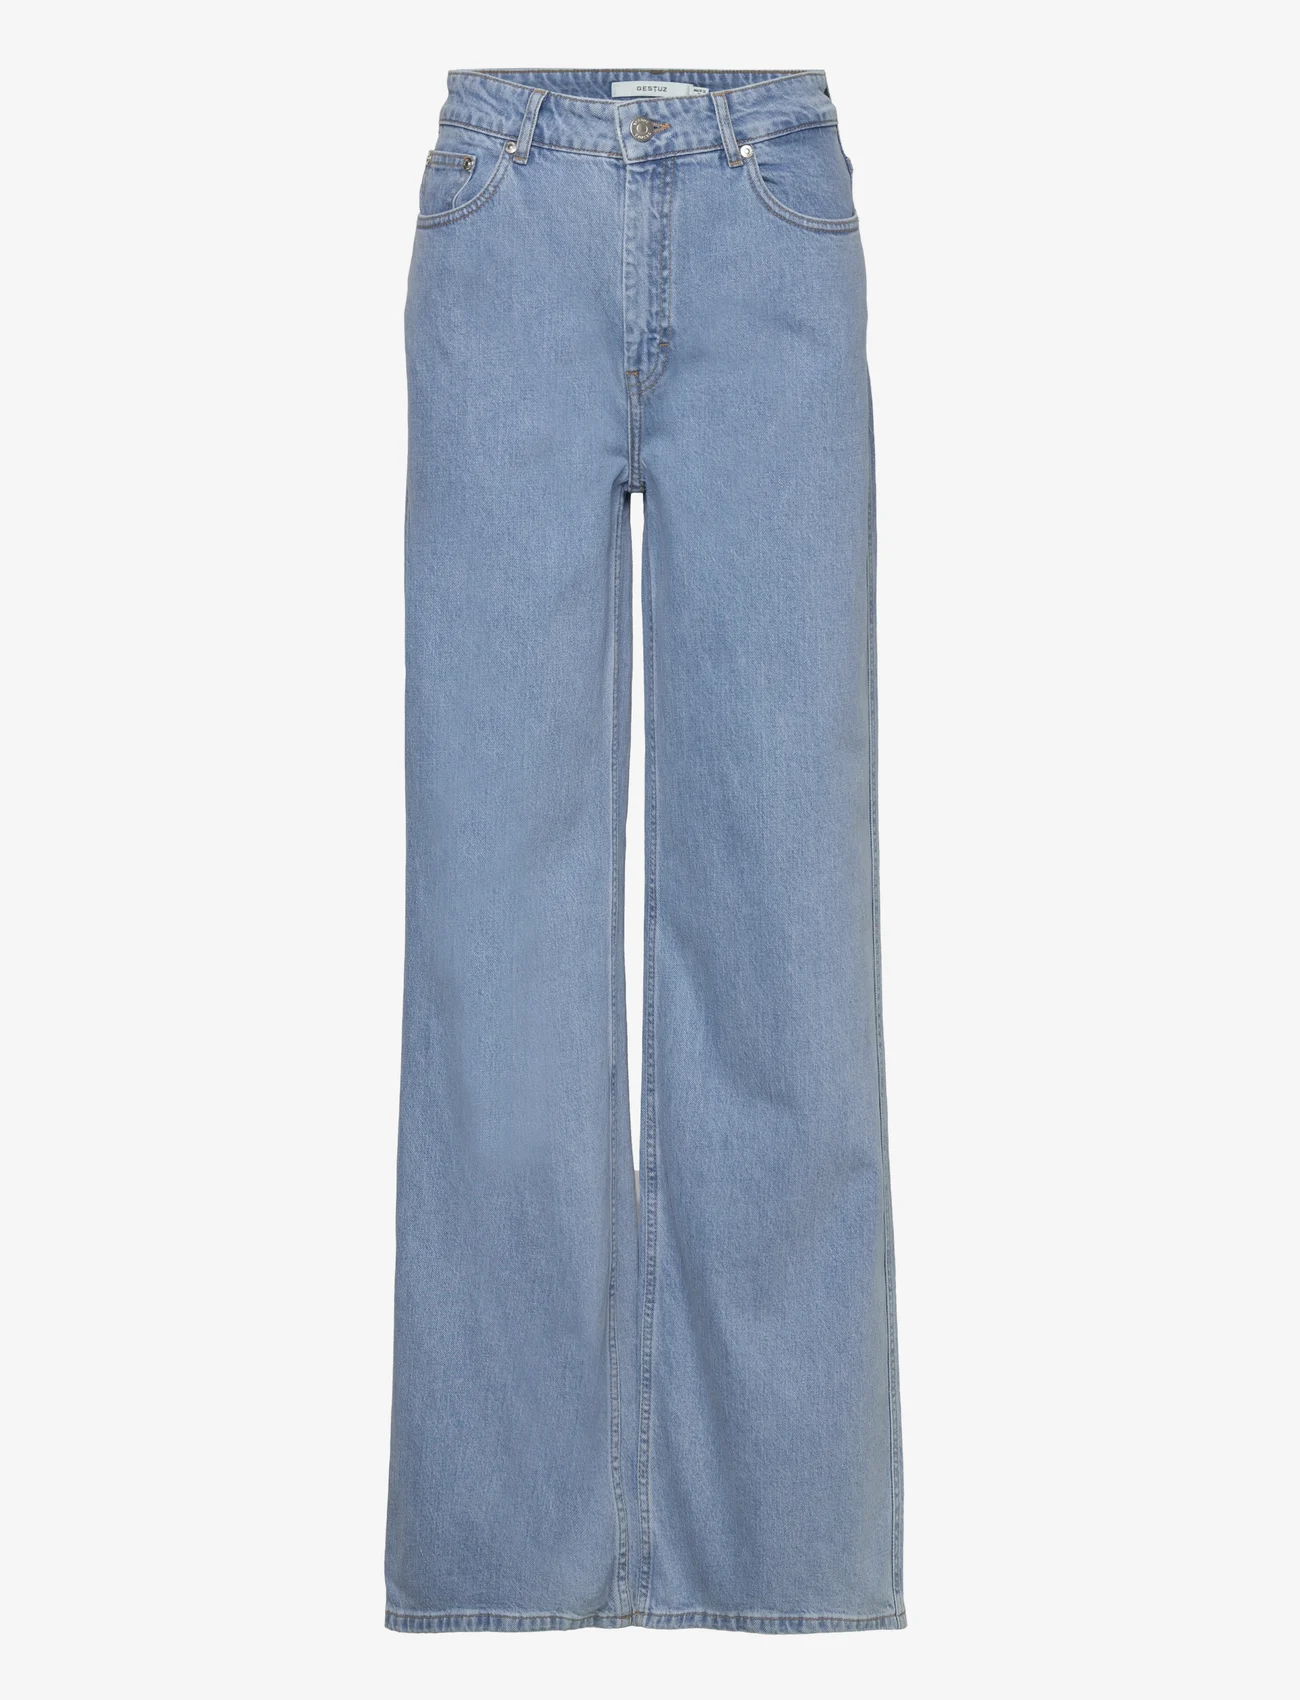 Gestuz - AuraGZ HW wide jeans NOOS - wide leg jeans - mid blue washed - 0